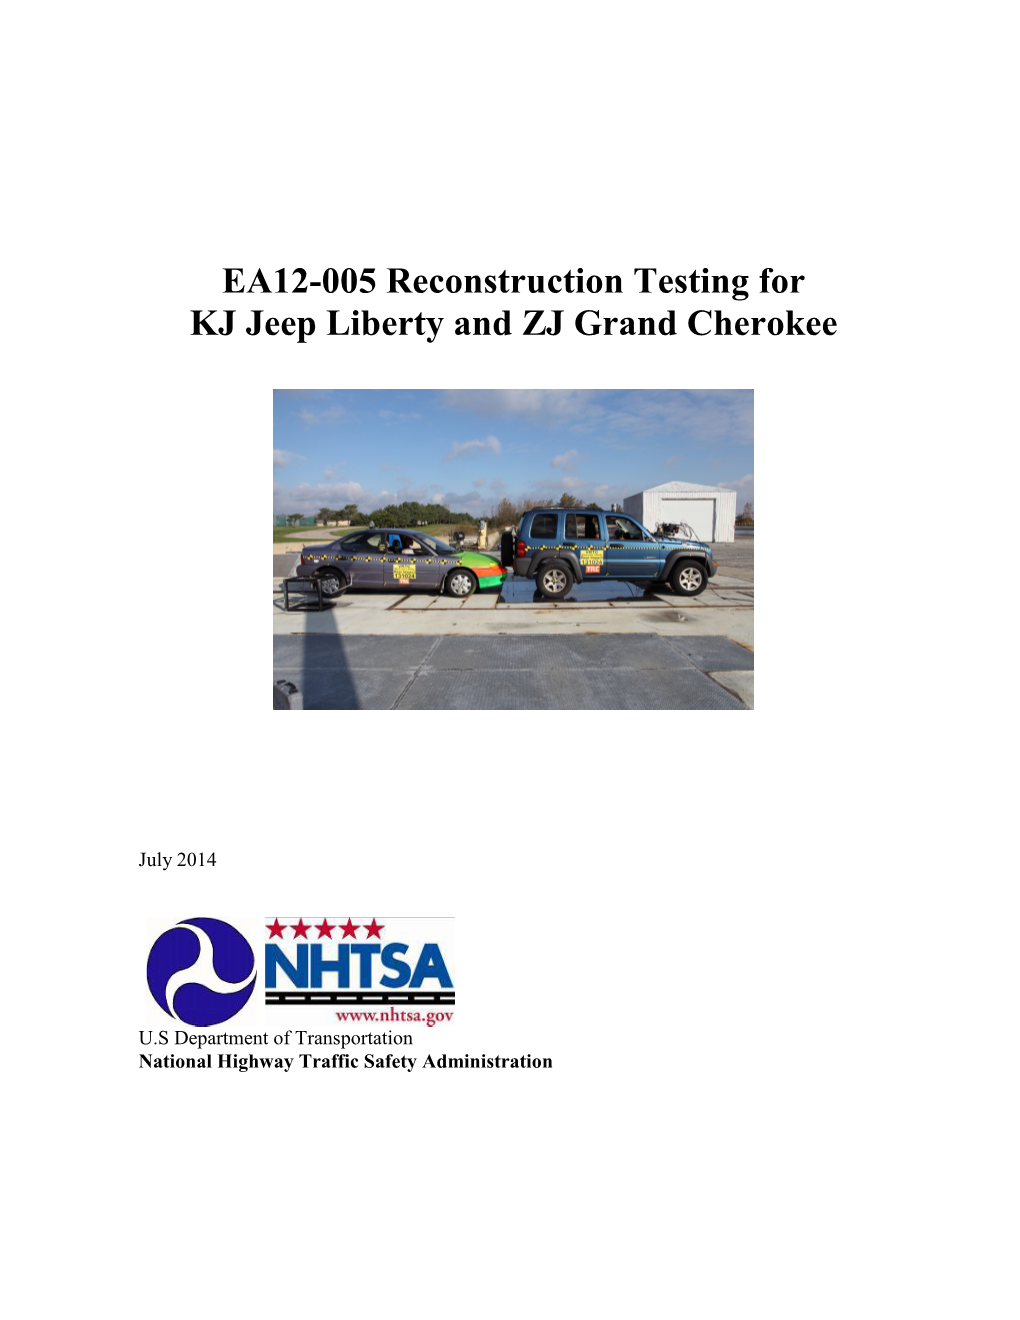 EA12-005 Reconstruction Testing for KJ Jeep Liberty and ZJ Grand Cherokee